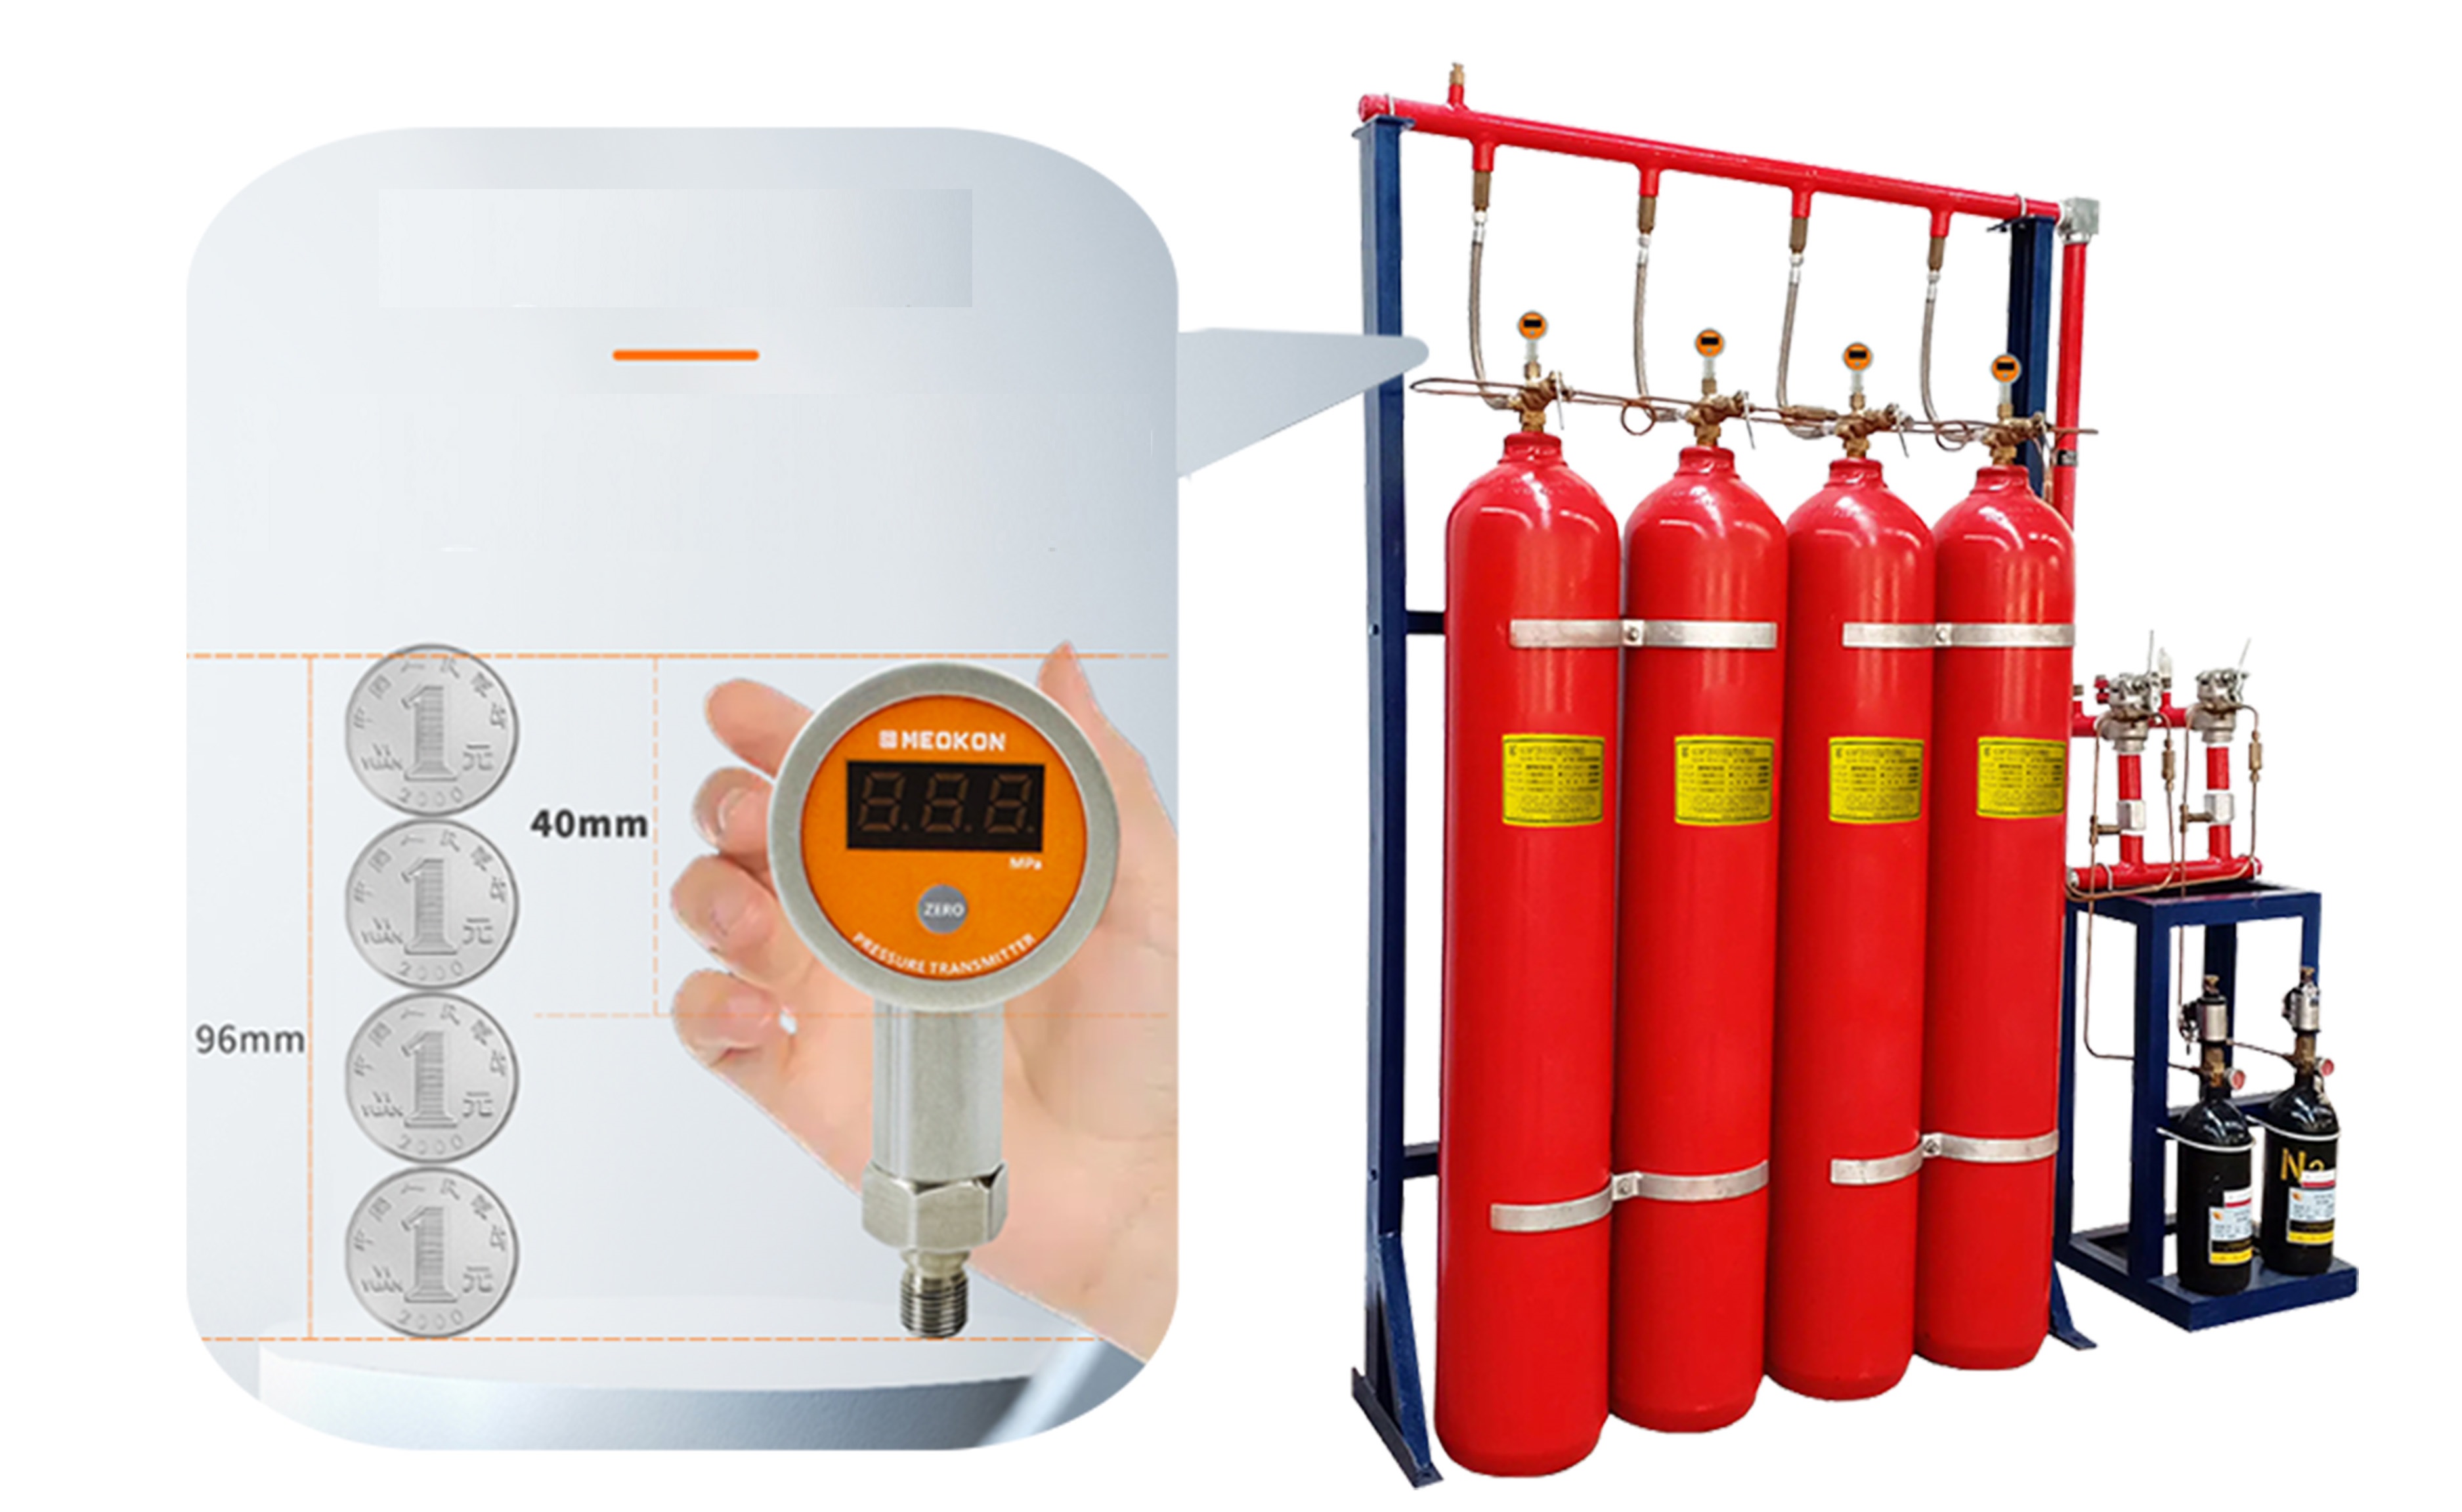 https://www.meokonint.com/md-s540-digital-remote-pressure-gauge-on-fire-extinguisher-product/